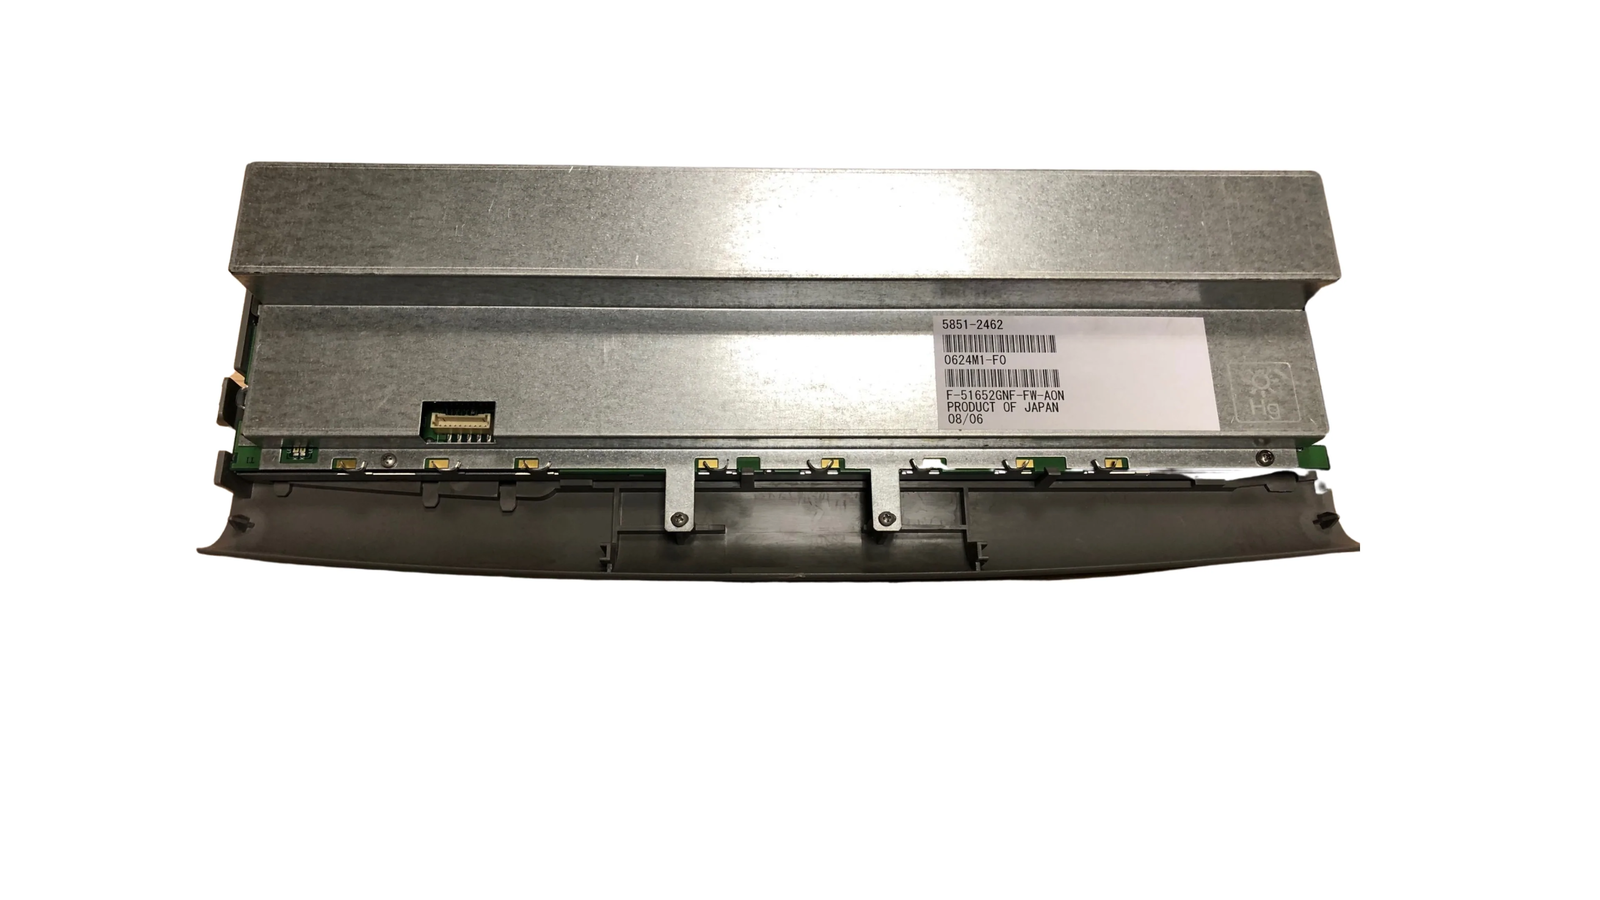 5851-2462 control panel for HP LaserJet 9040mfp